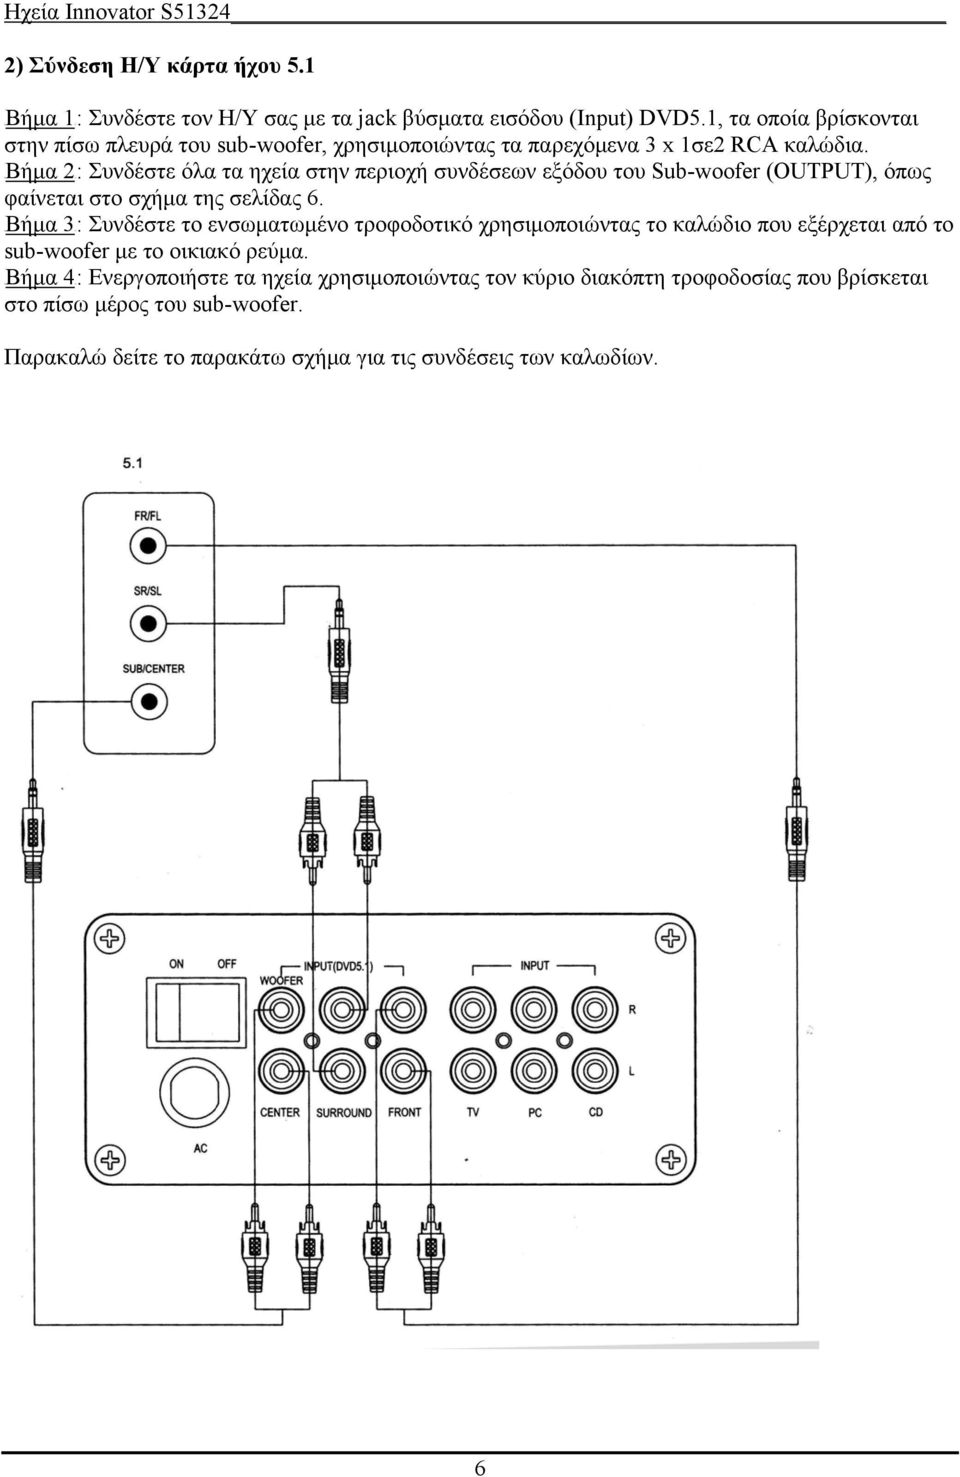 UΒήμα 2U: Συνδέστε όλα τα ηχεία στην περιοχή συνδέσεων εξόδου του Sub-woofer (OUTPUT), όπως φαίνεται στο σχήμα της σελίδας 6.